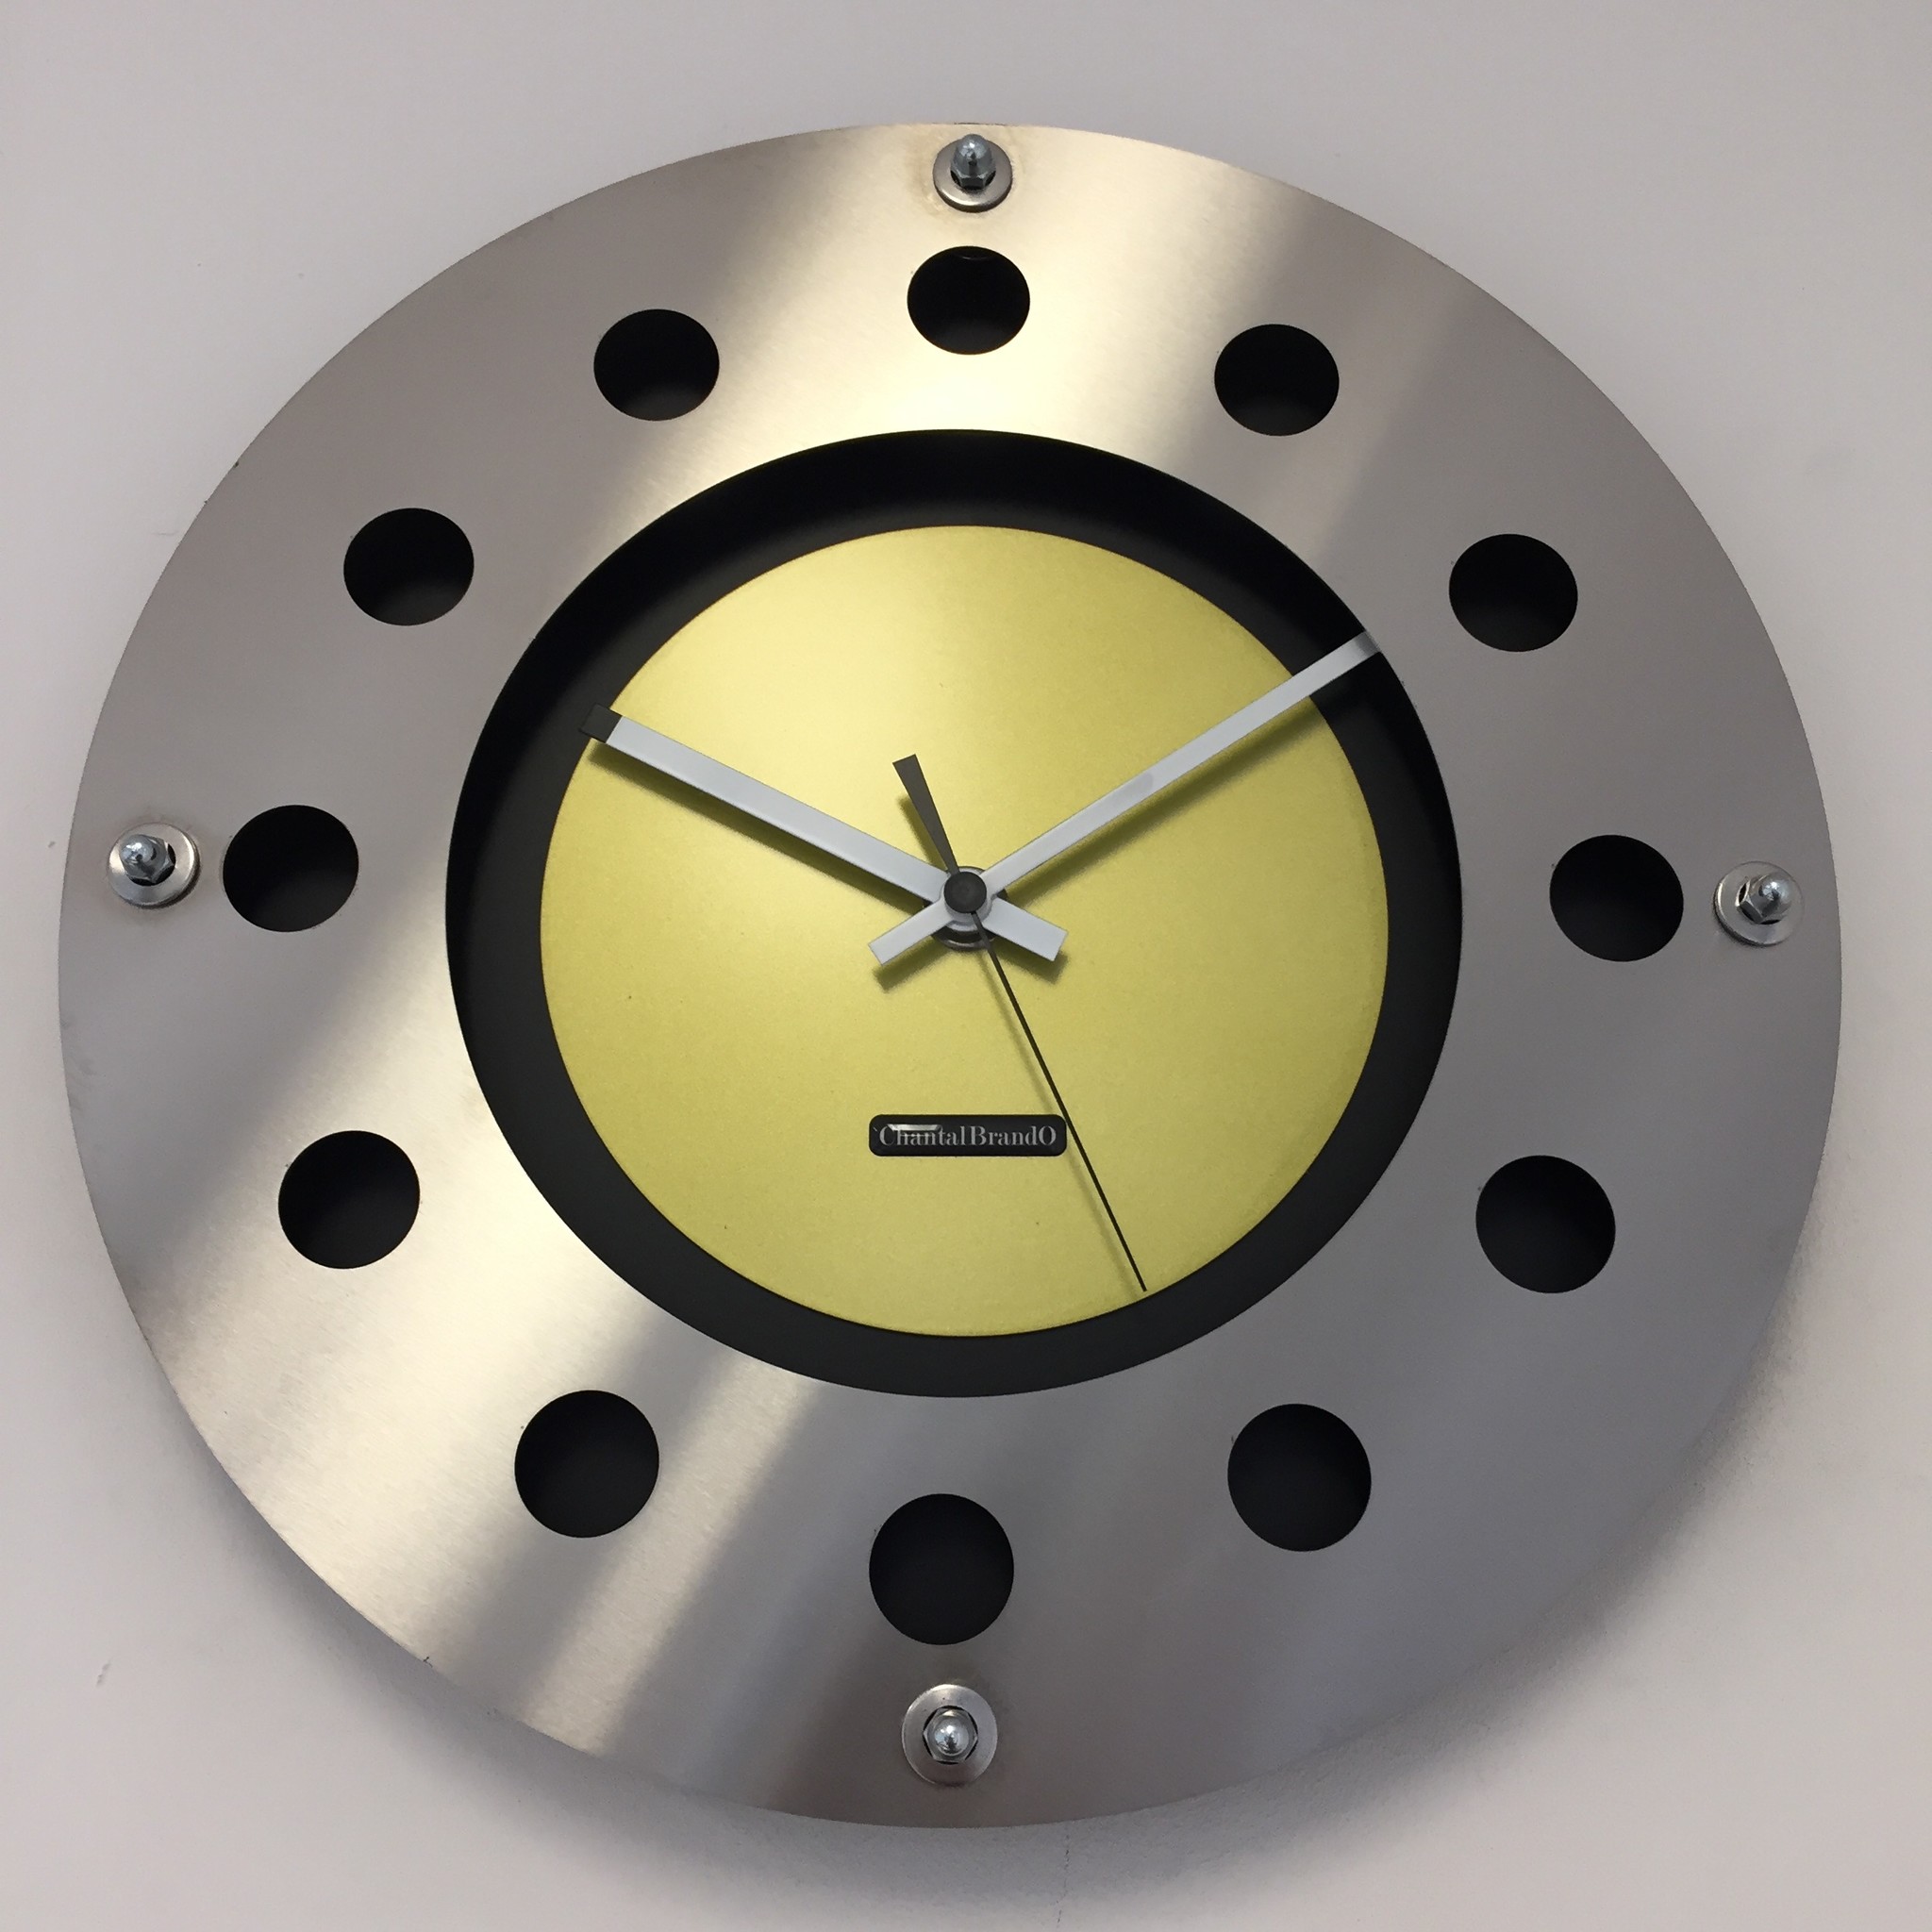 ChantalBrandO Design - Wall clock Mecanica Full Black With Lemmon Color Small Inside Circle White Black Pointer Modern Dutch Design Handgemaintt 40 cm